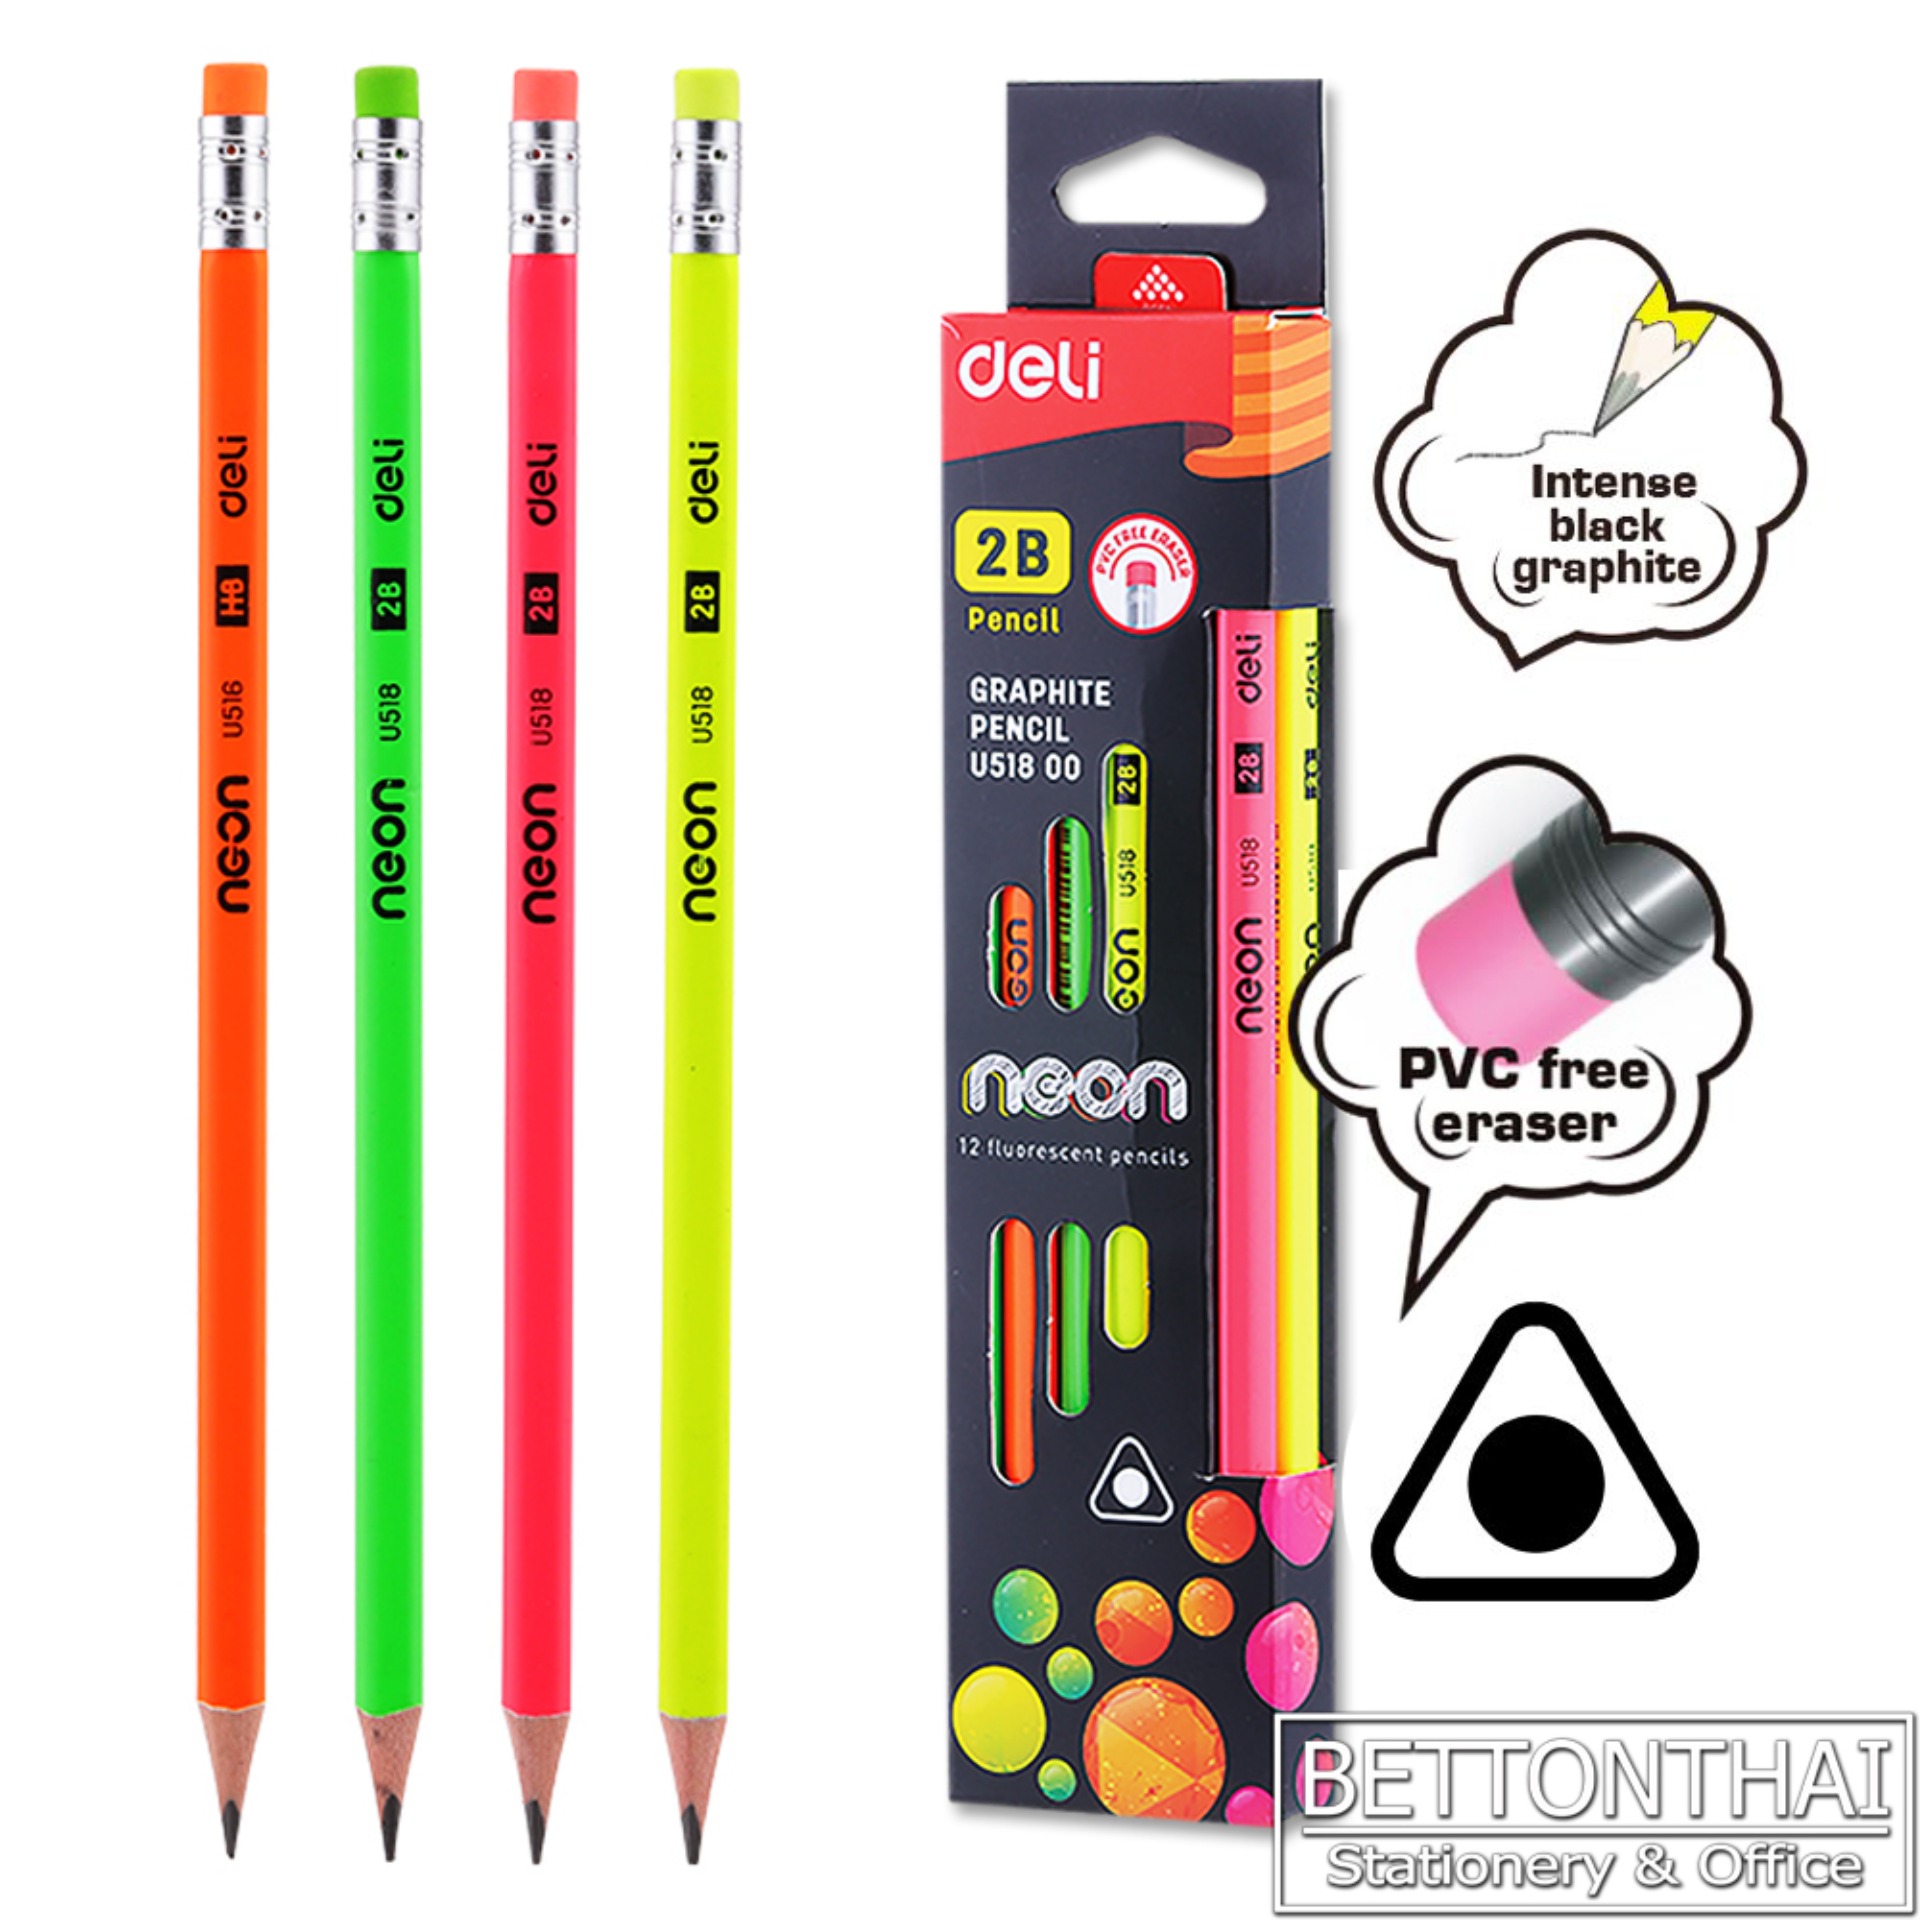 Graphite Pencil ดินสอไม้ 2B ทรง 3 เหลี่ยม สีสันสดใสโดนเด่นด้วยสีนีออน แพค 12 แท่ง ดินสอนักเรียน ดินสอสีสดใส ดินสอ เครื่องเขียน อุปกรณ์การเรียน ยี่ห้อ Deli U51800 school